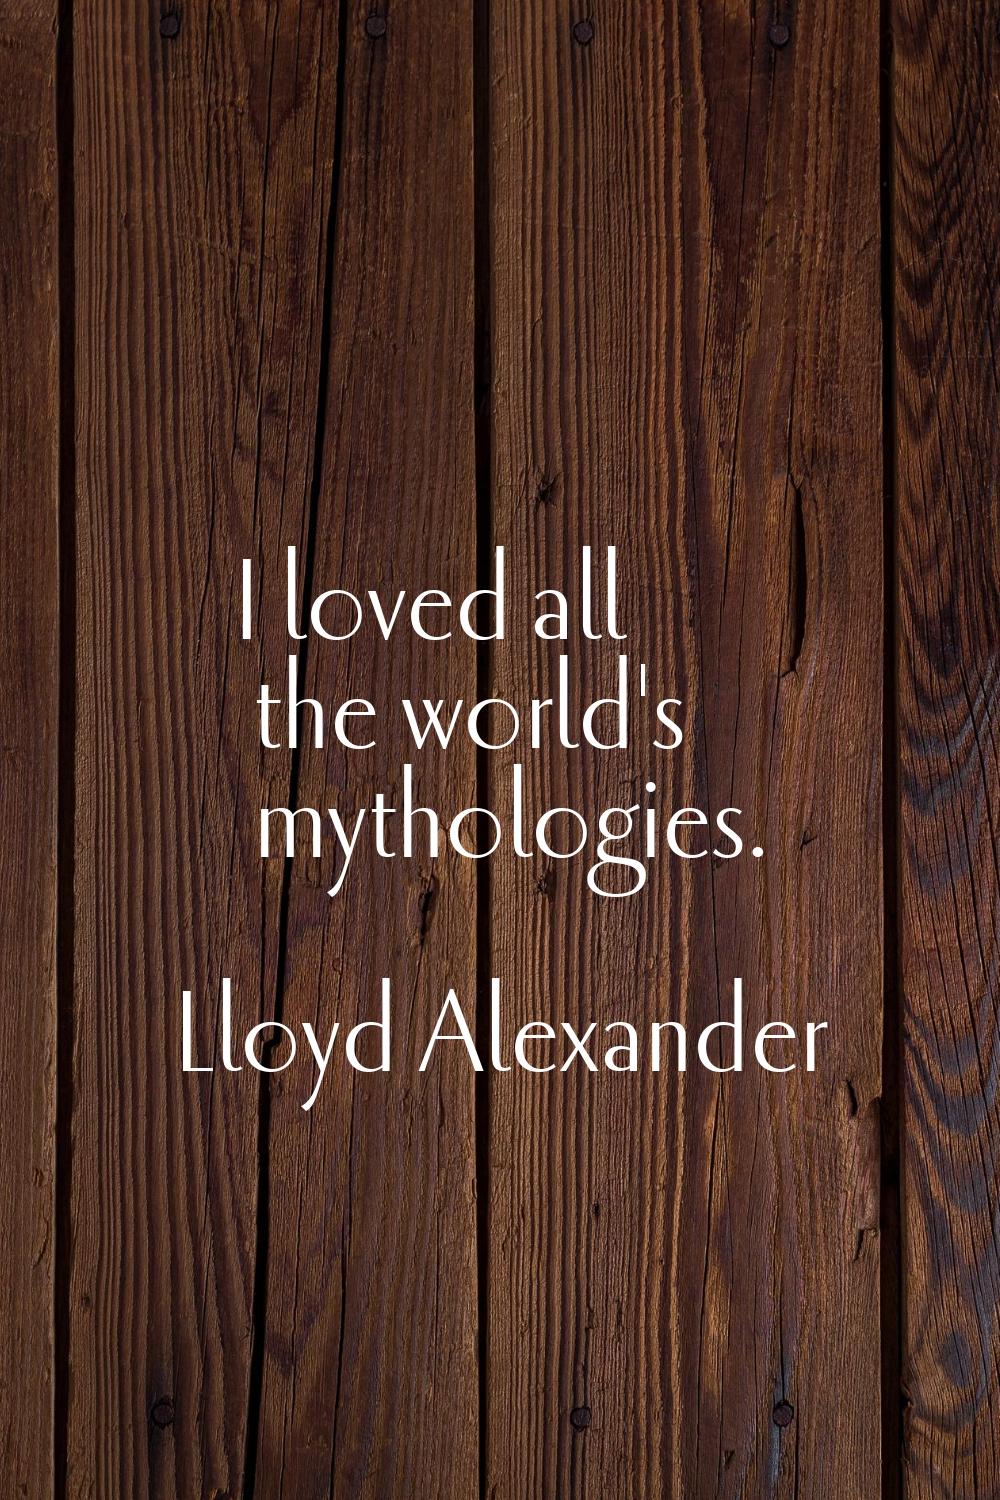 I loved all the world's mythologies.